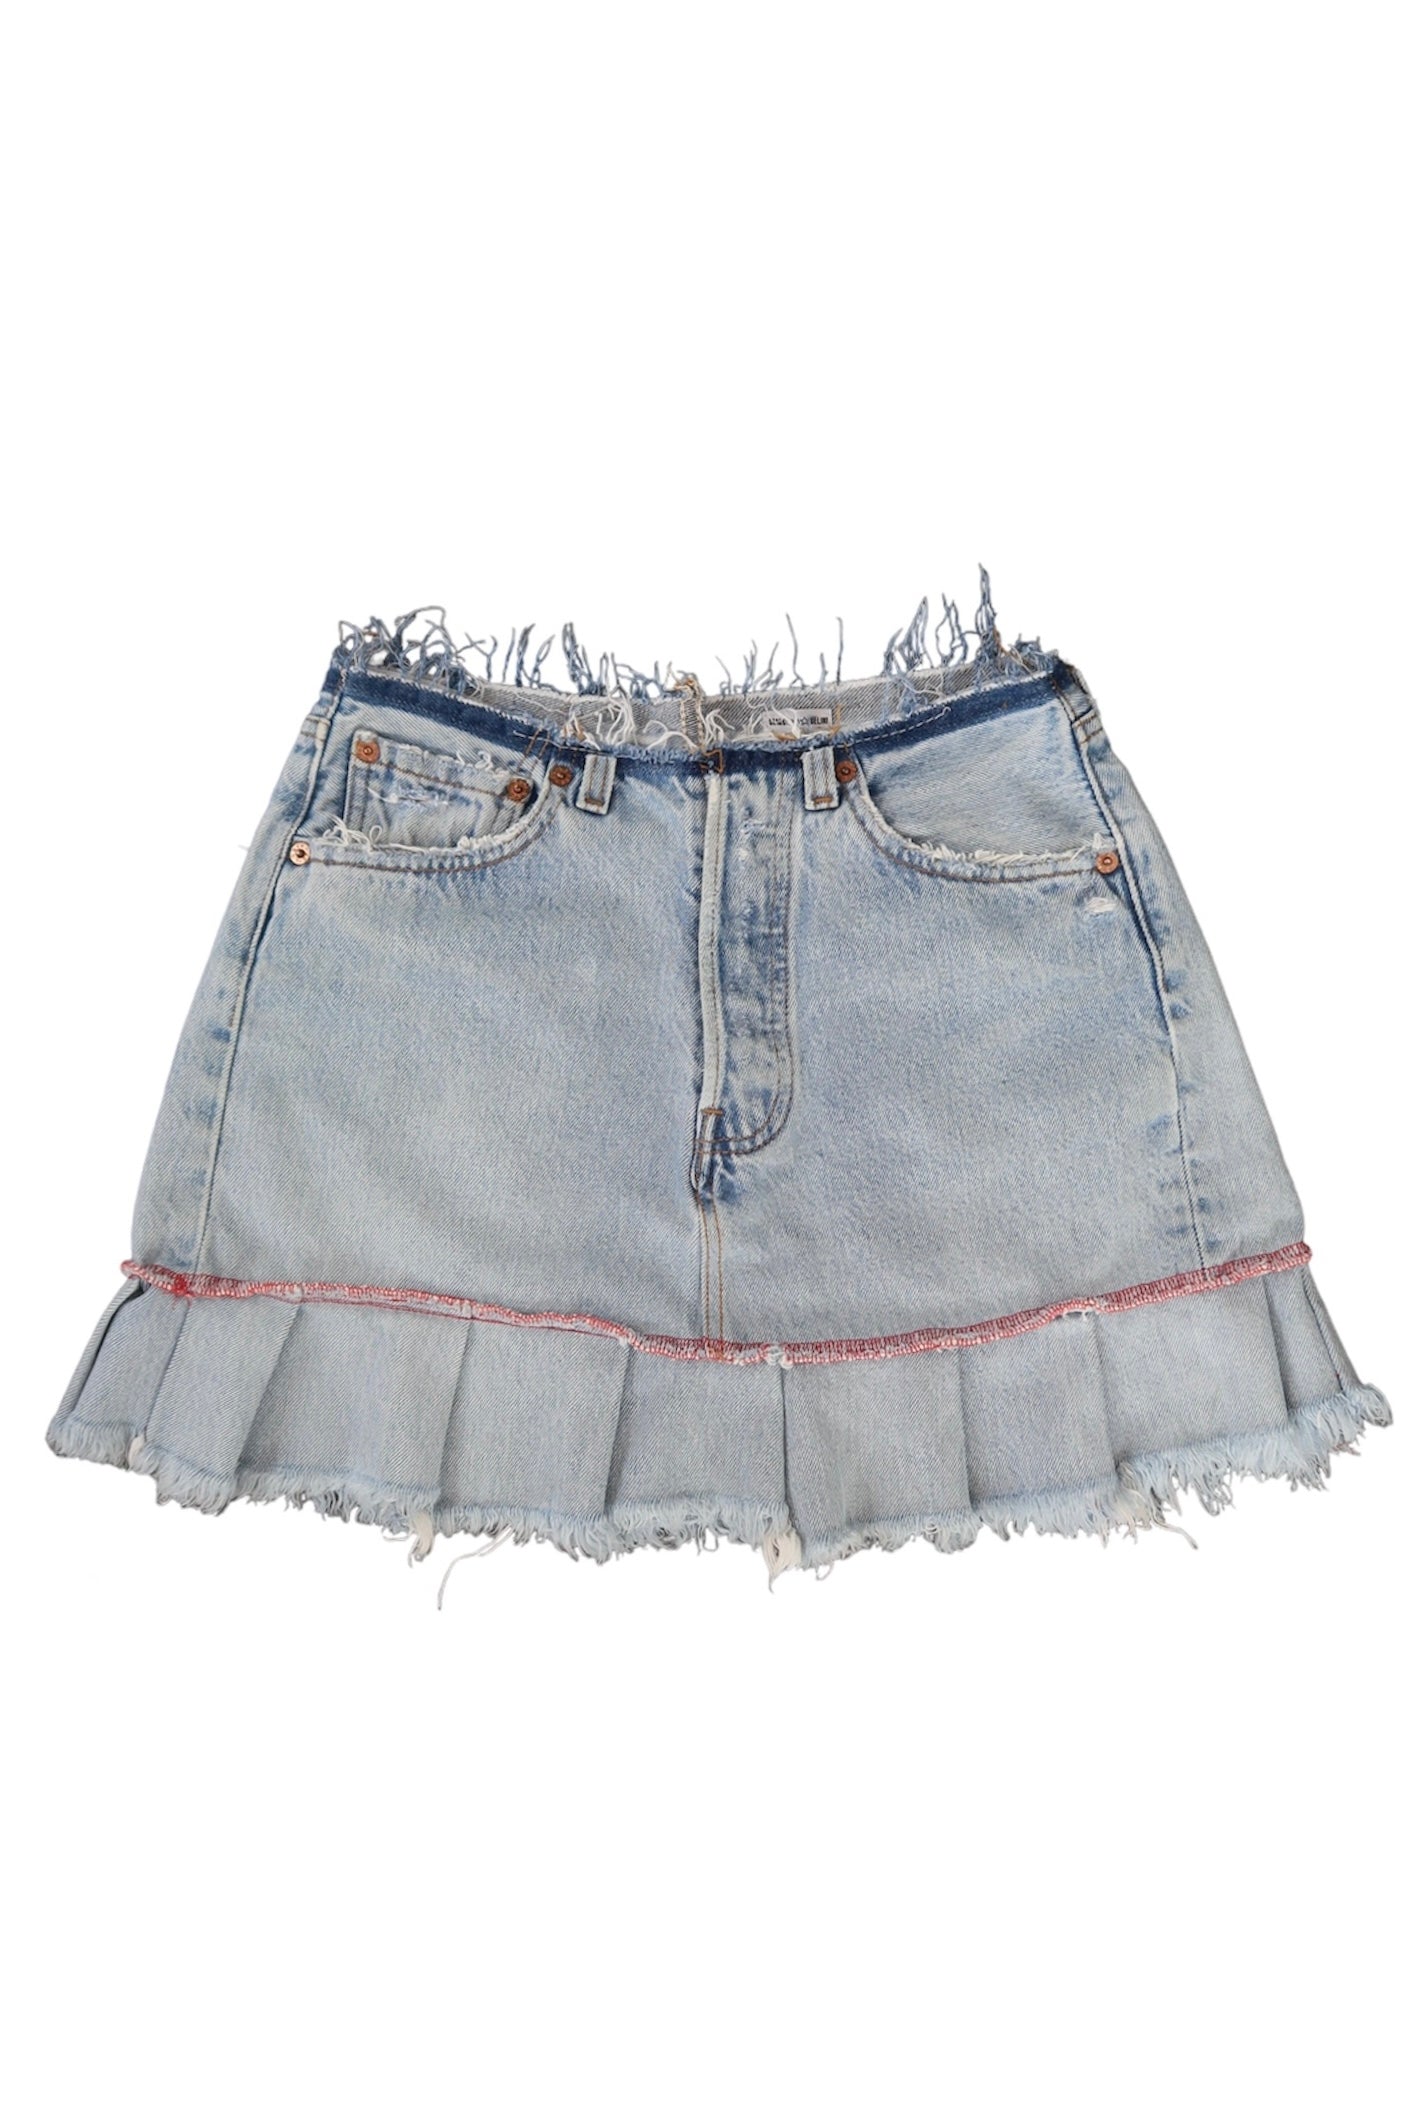 Reworked Levi’s Mini Skirt